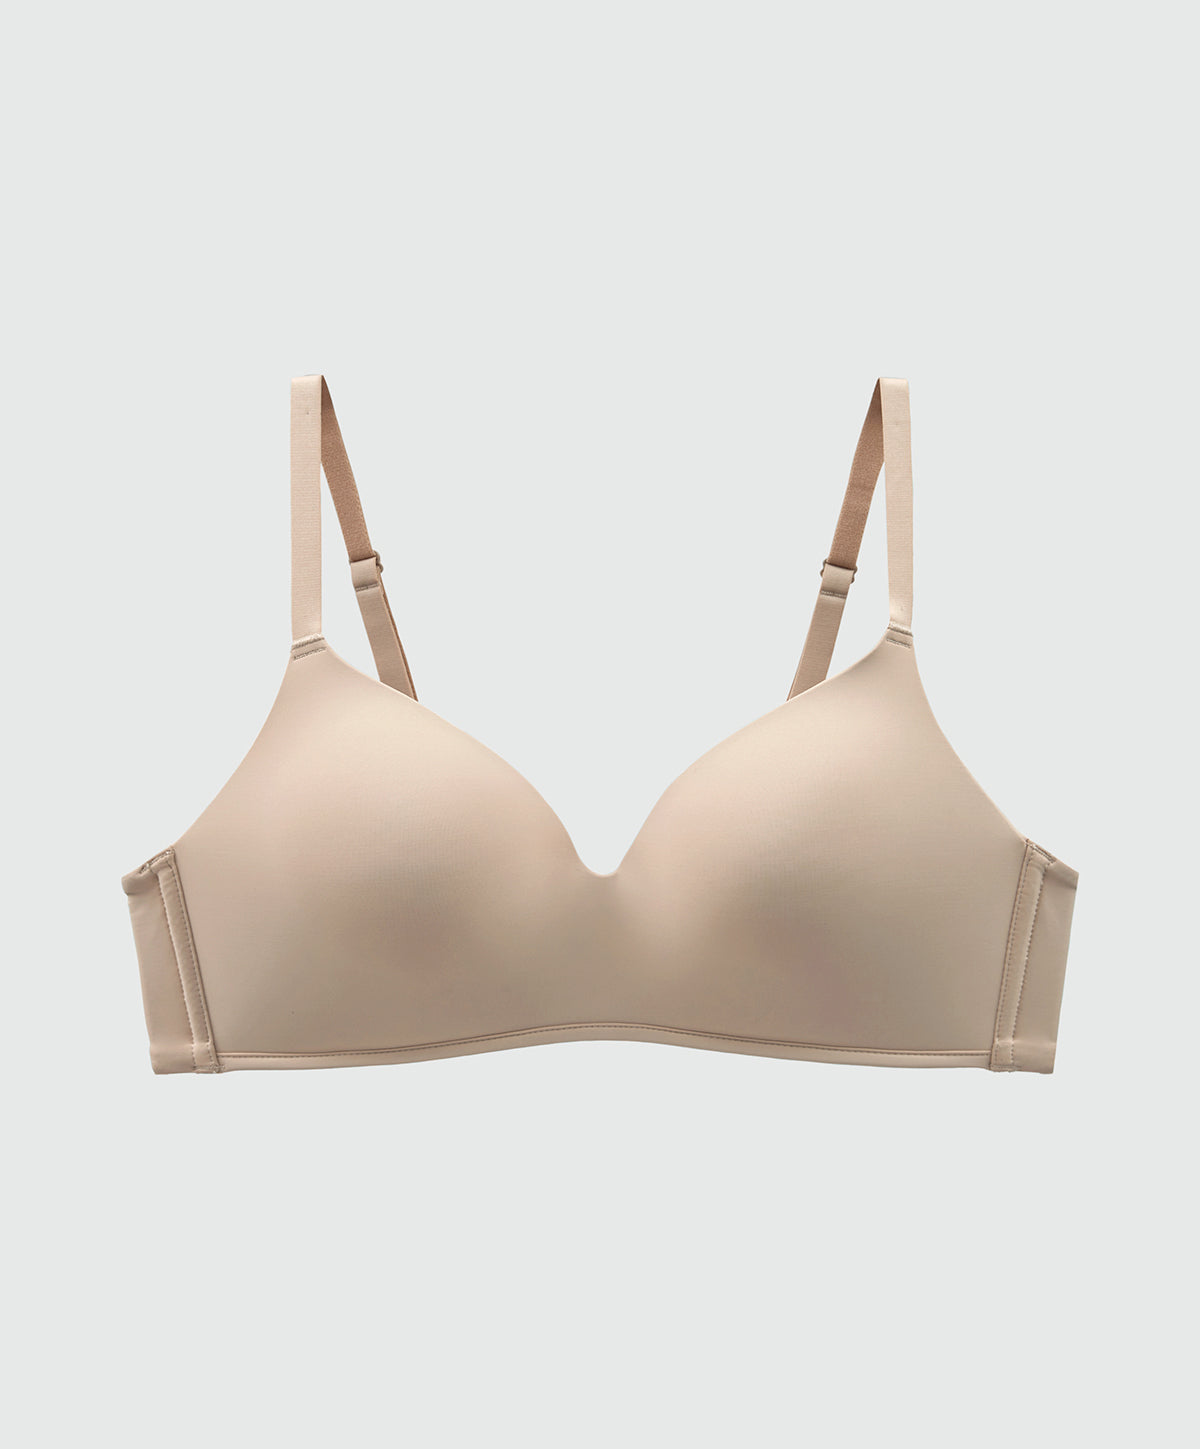 Qoo10 - Rosebud skin origin simple(5204) bra + panty set / wireless bra /  corr : Lingerie & Sleep